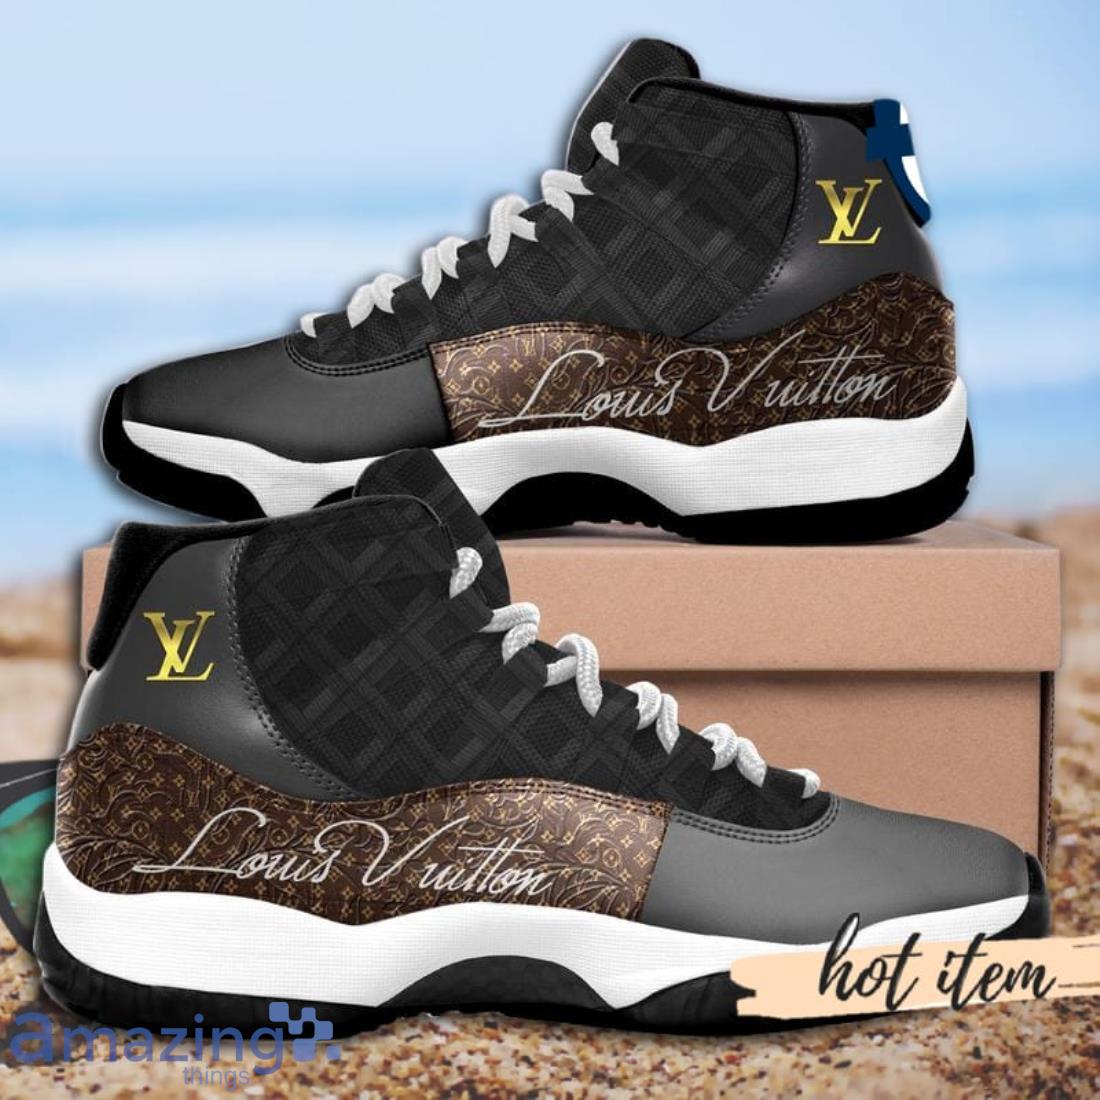 Louis Vuitton Black Air Jordan 11 Shoes Fashsion Shoes